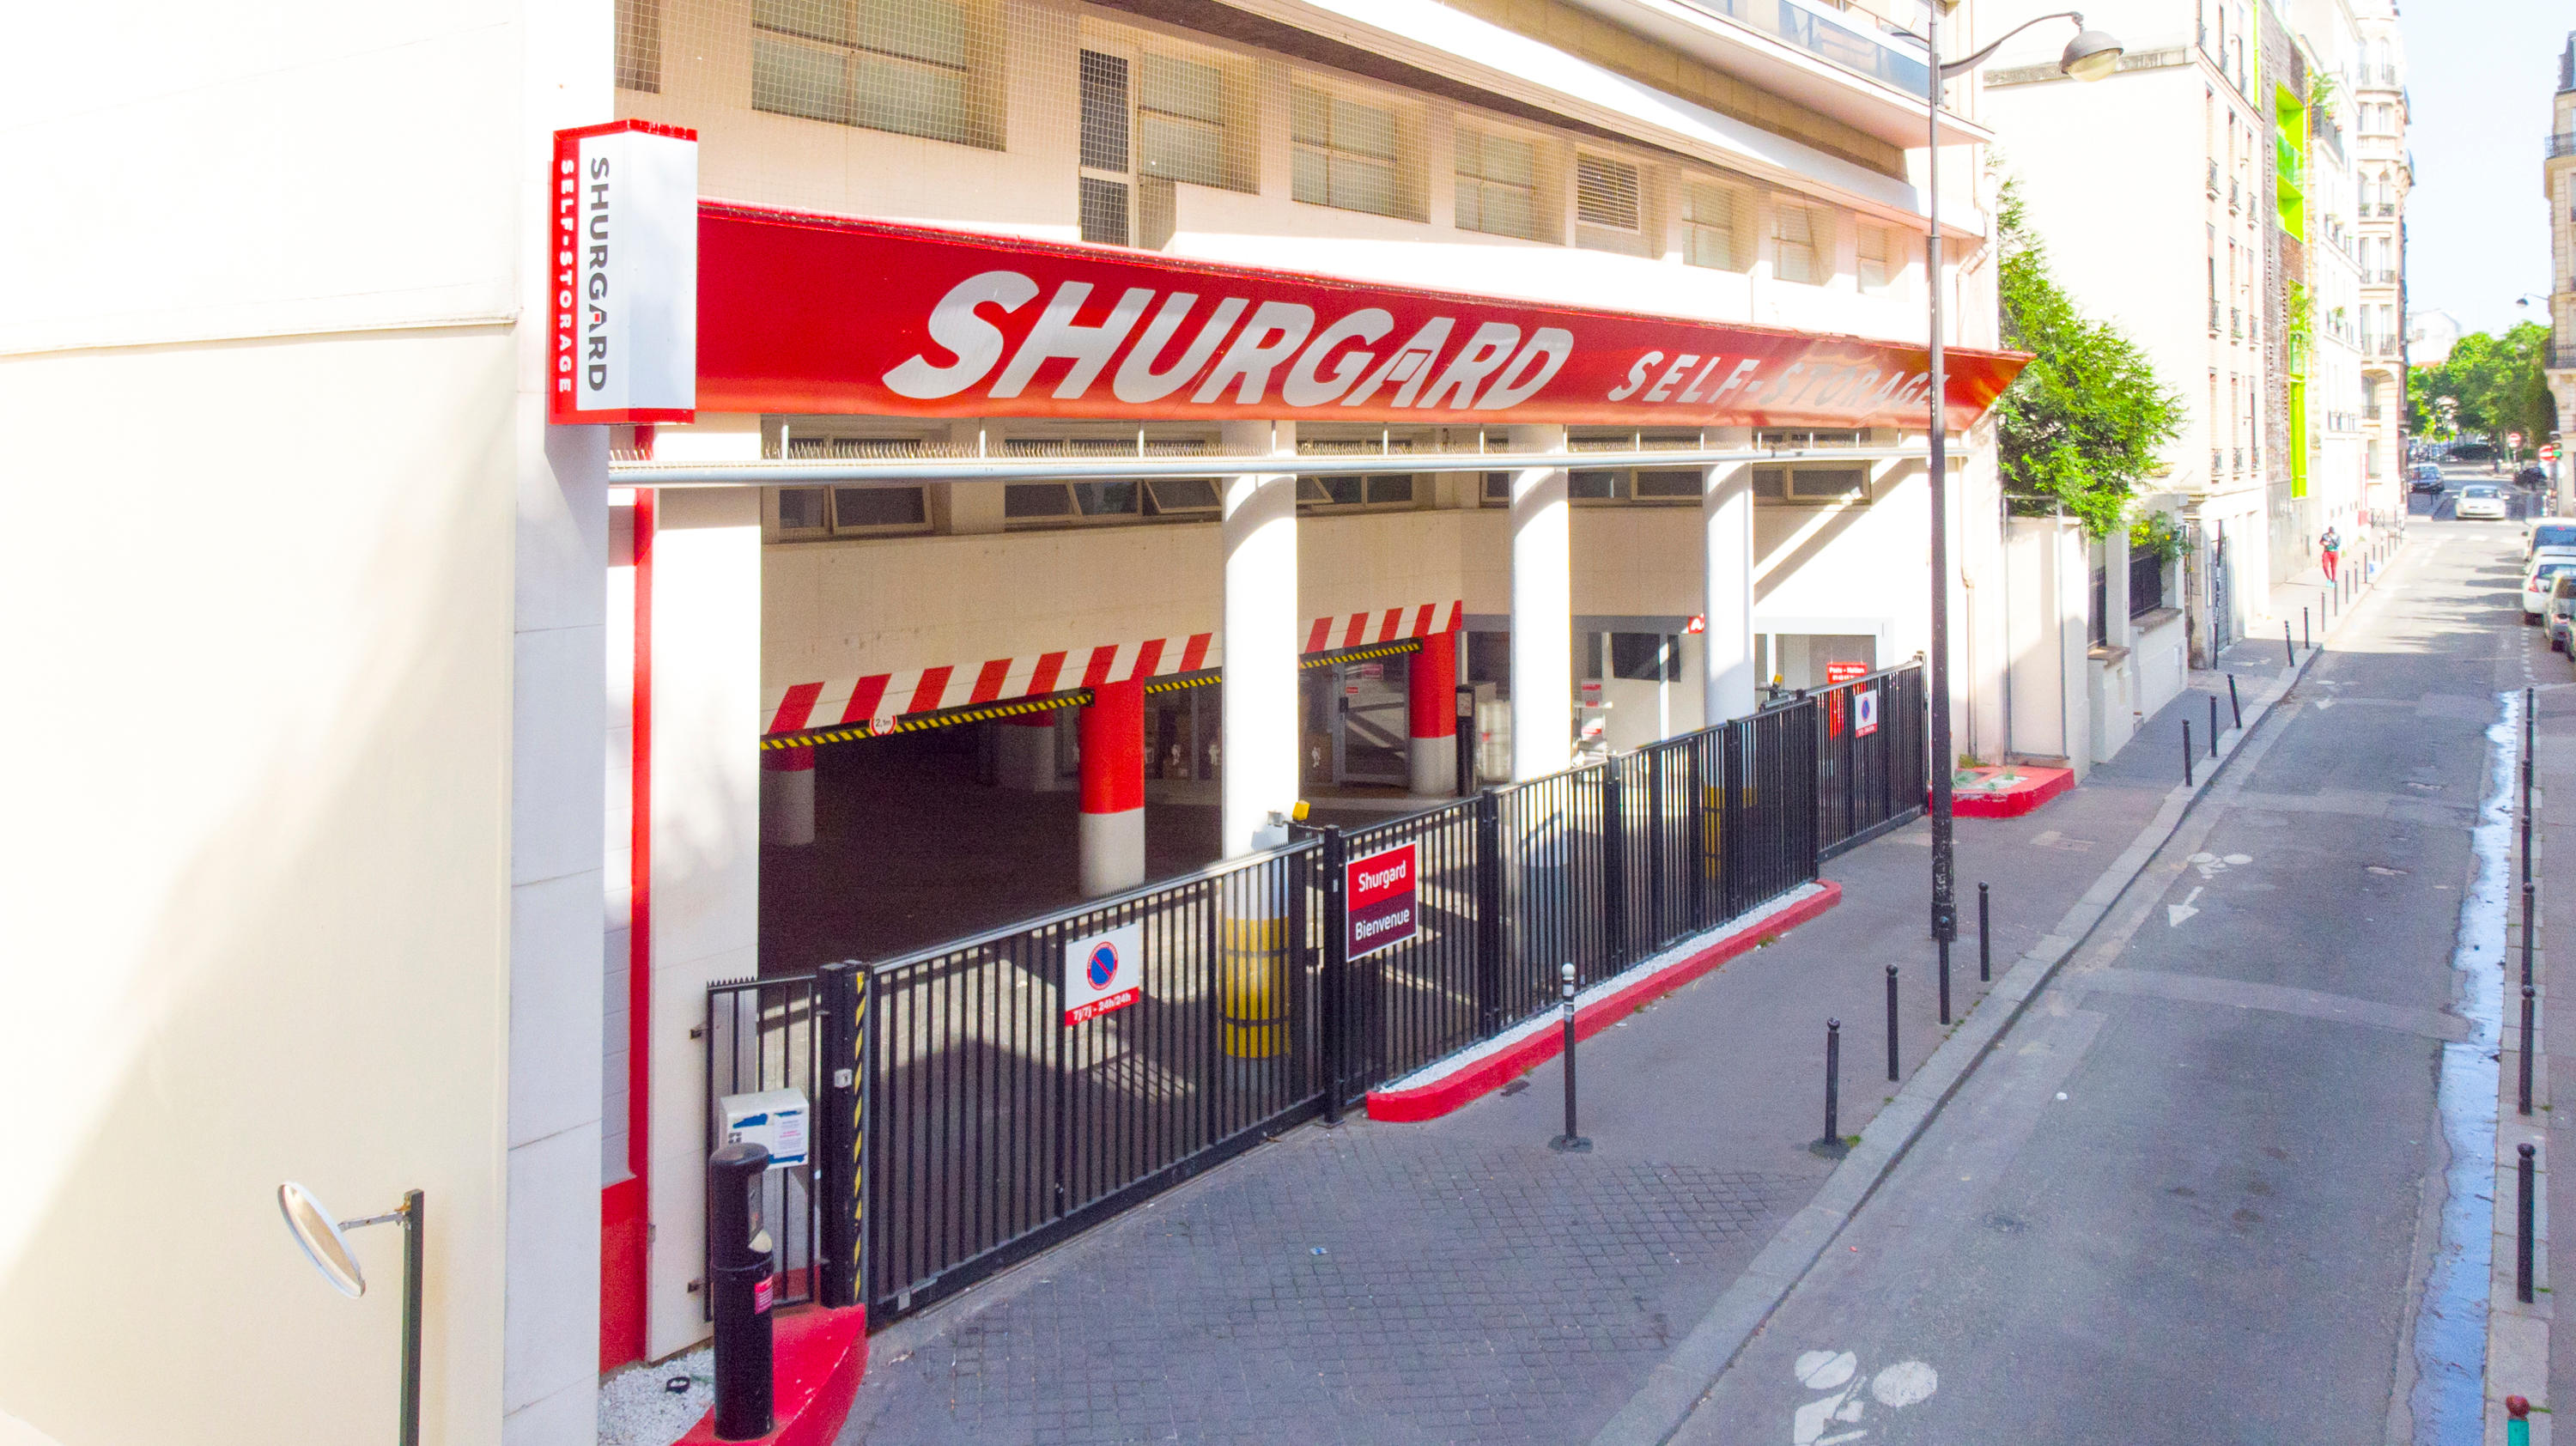 Shurgard Self Storage Paris 12 - Nation